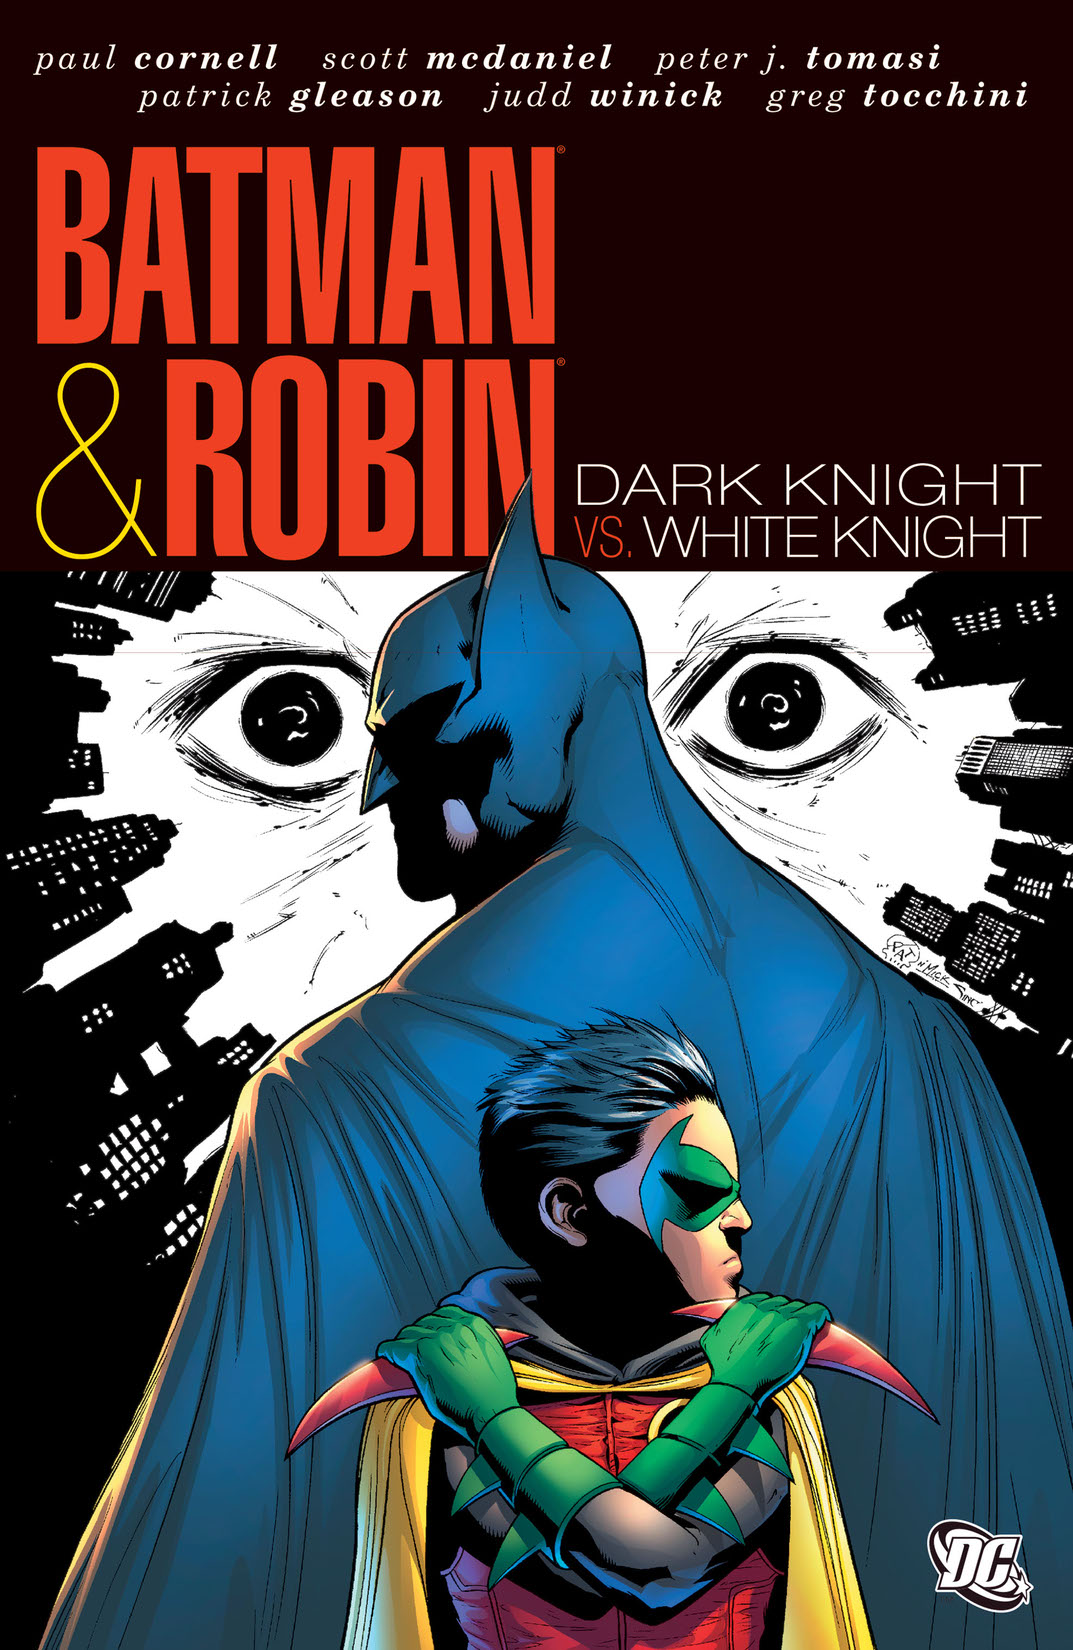 Batman & Robin: Dark Knight Vs. White Knight preview images